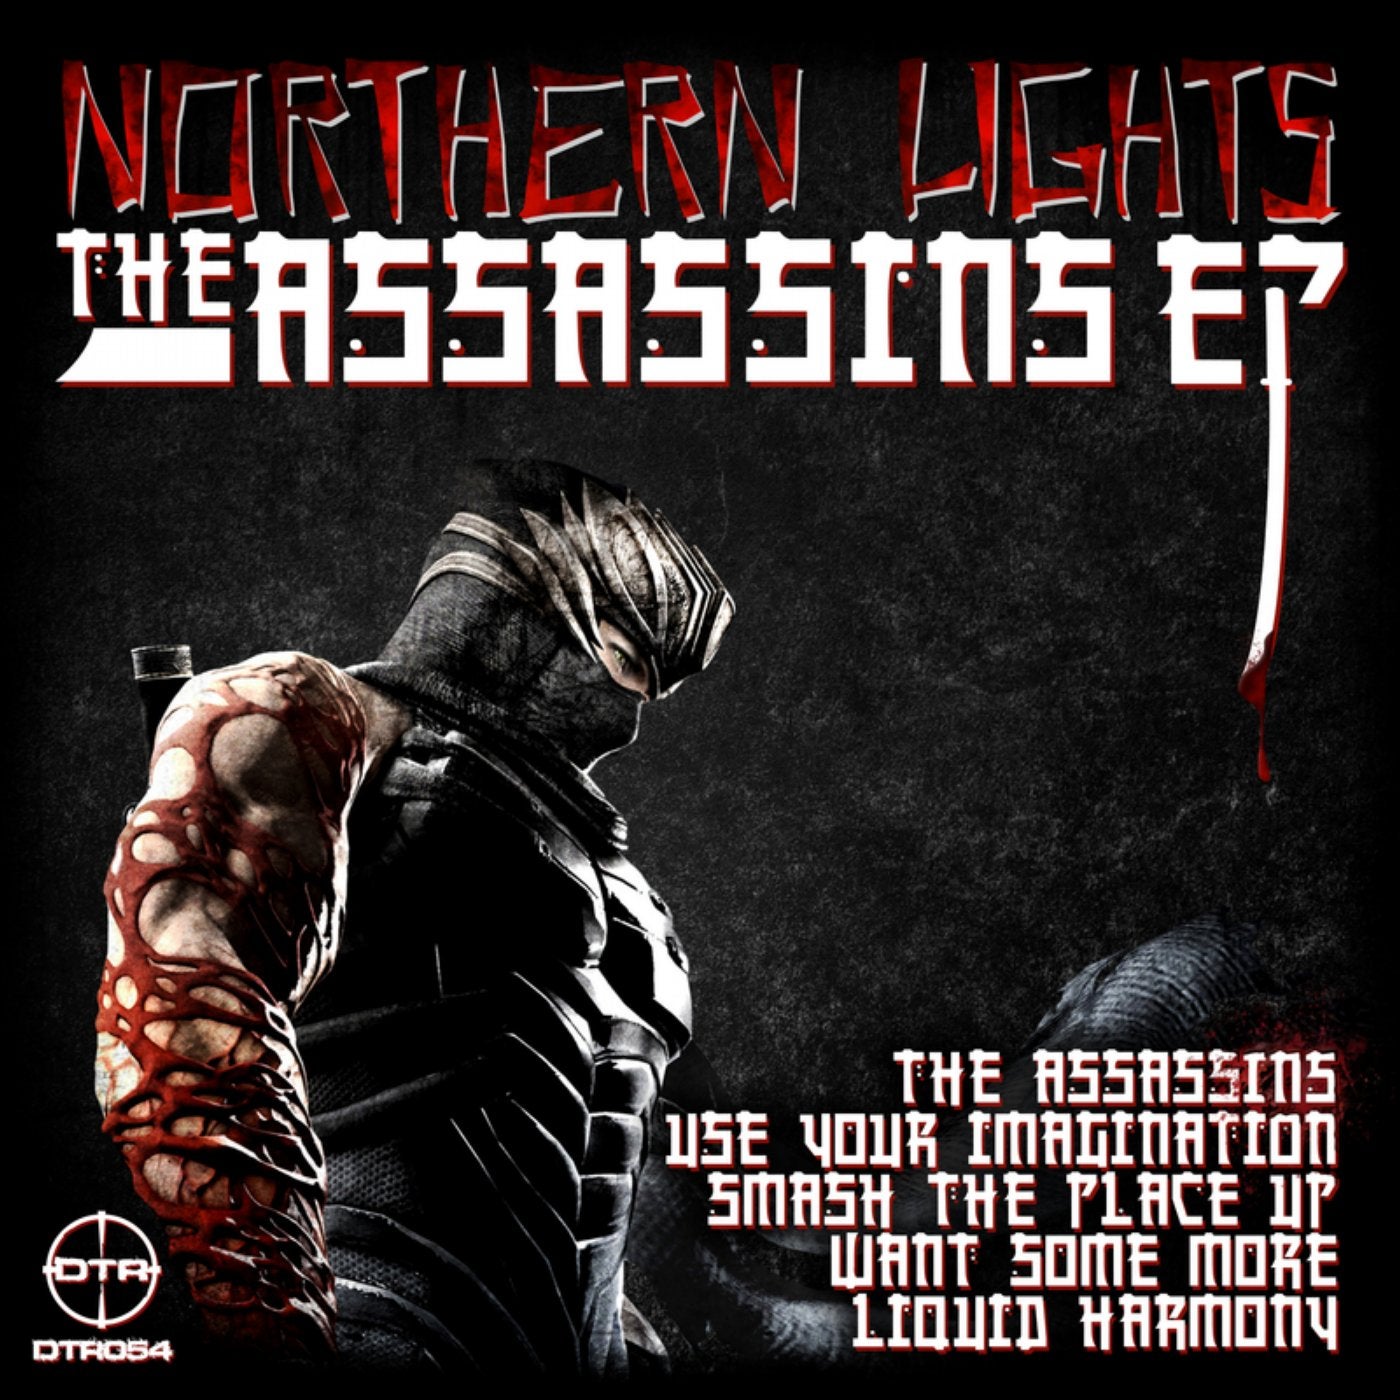 The 'Assassins' EP